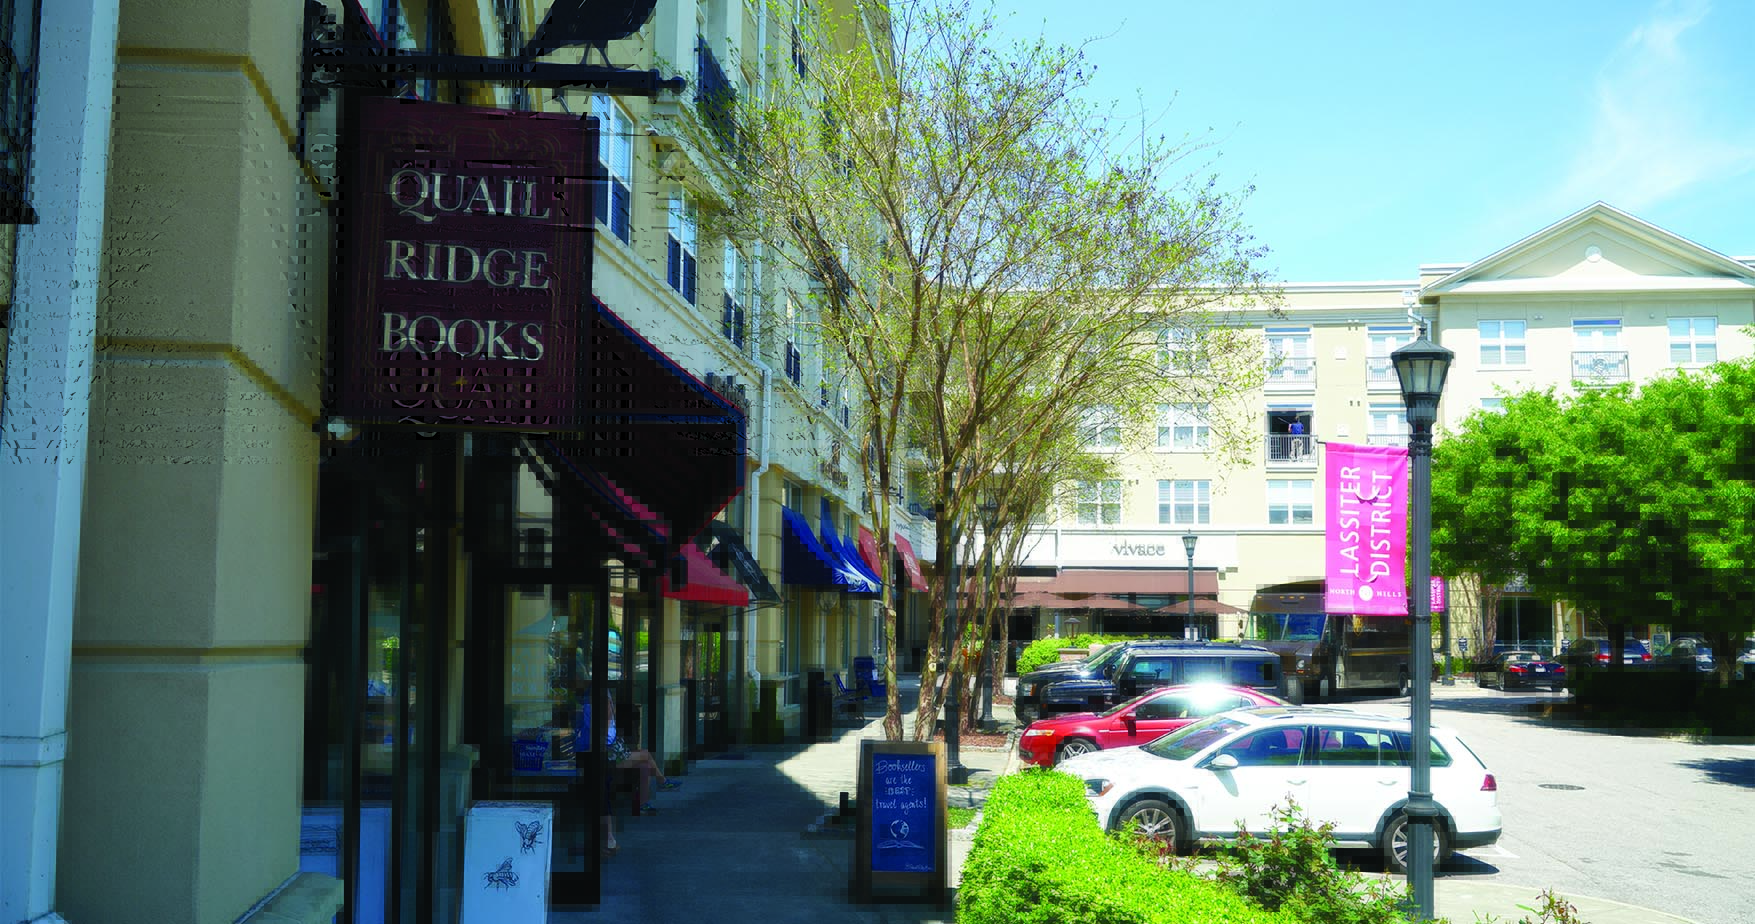 Vine North Hills - View of the neighborhood, specifically Quail Ridge Books